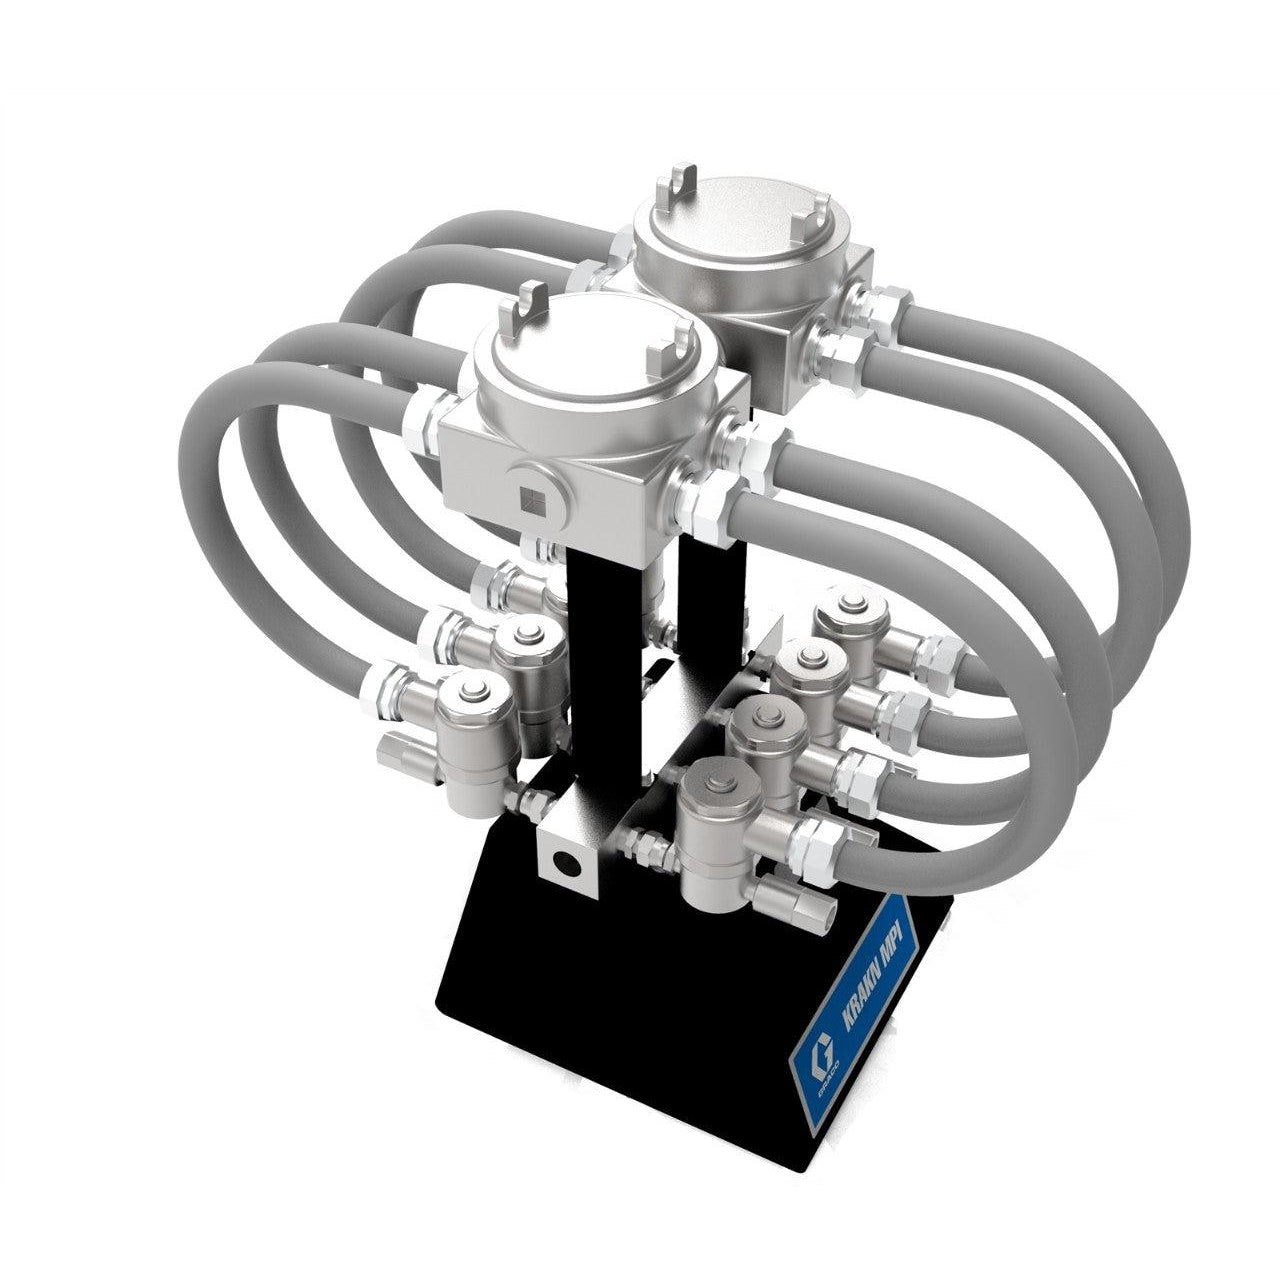 7 valve KRAKN MPI fluid manifold assembly for General Purpose use